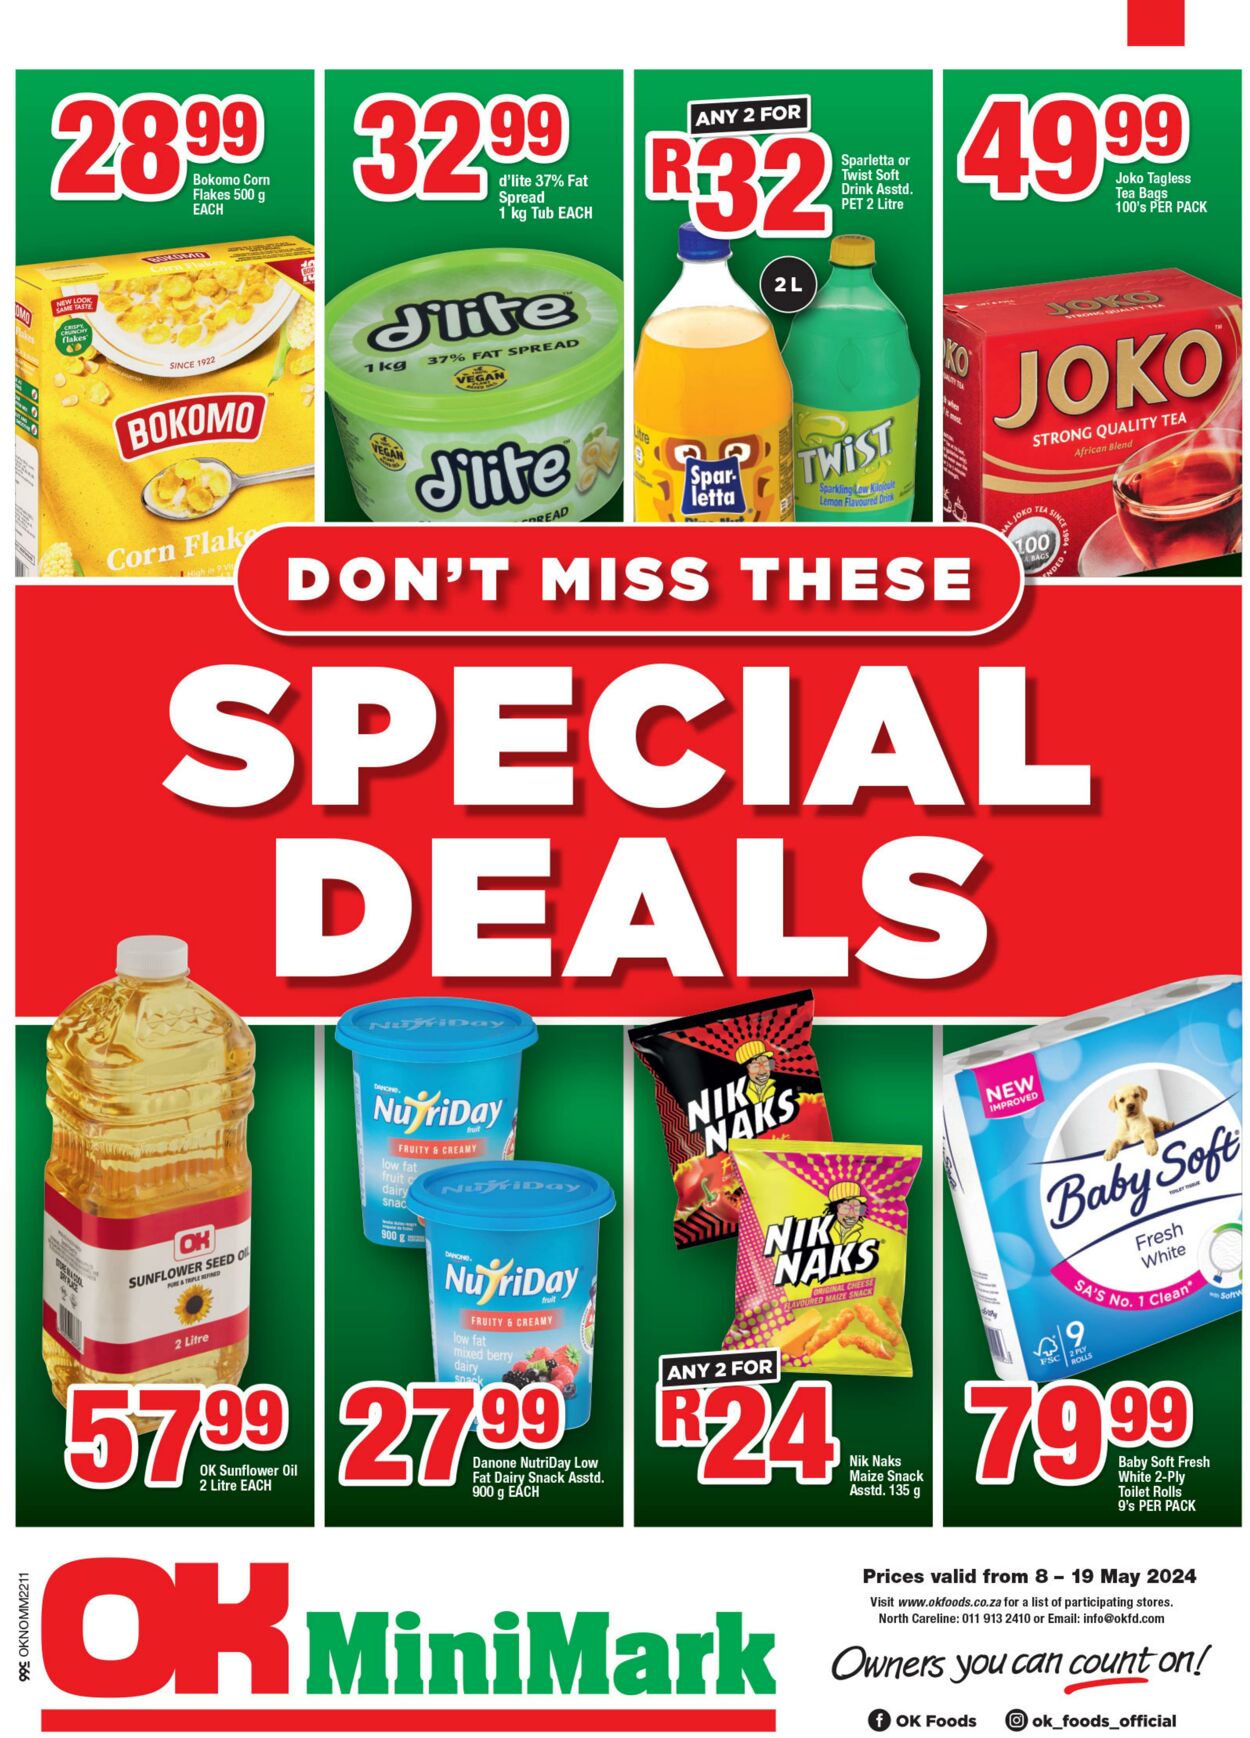 OK Foods Promotional specials